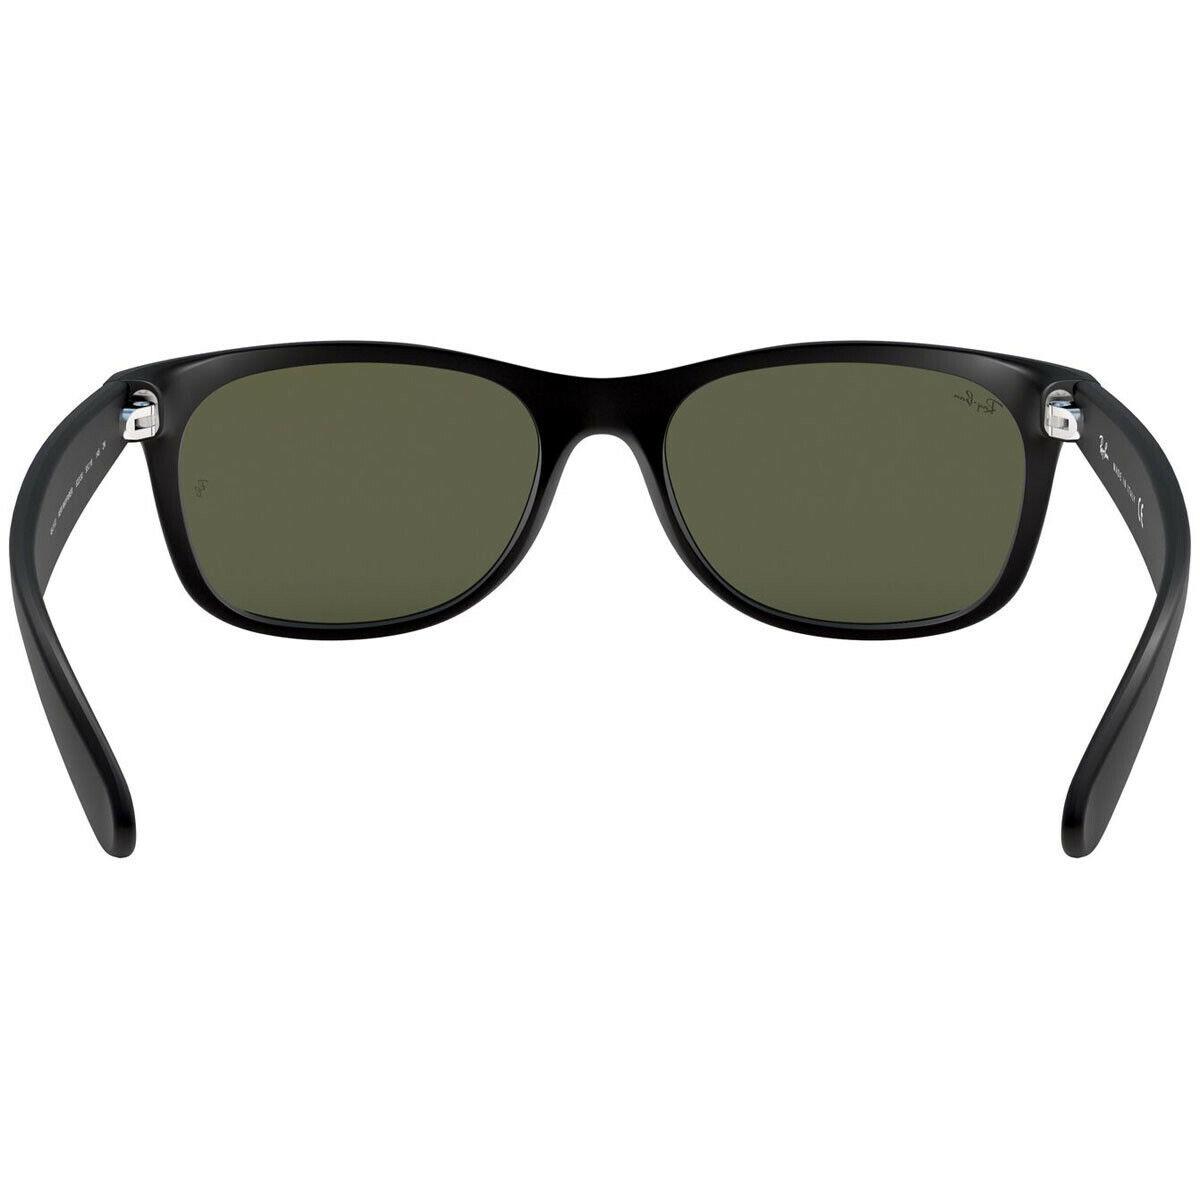 Ray-Ban sunglasses  - Black Frame, Silver Lens 1